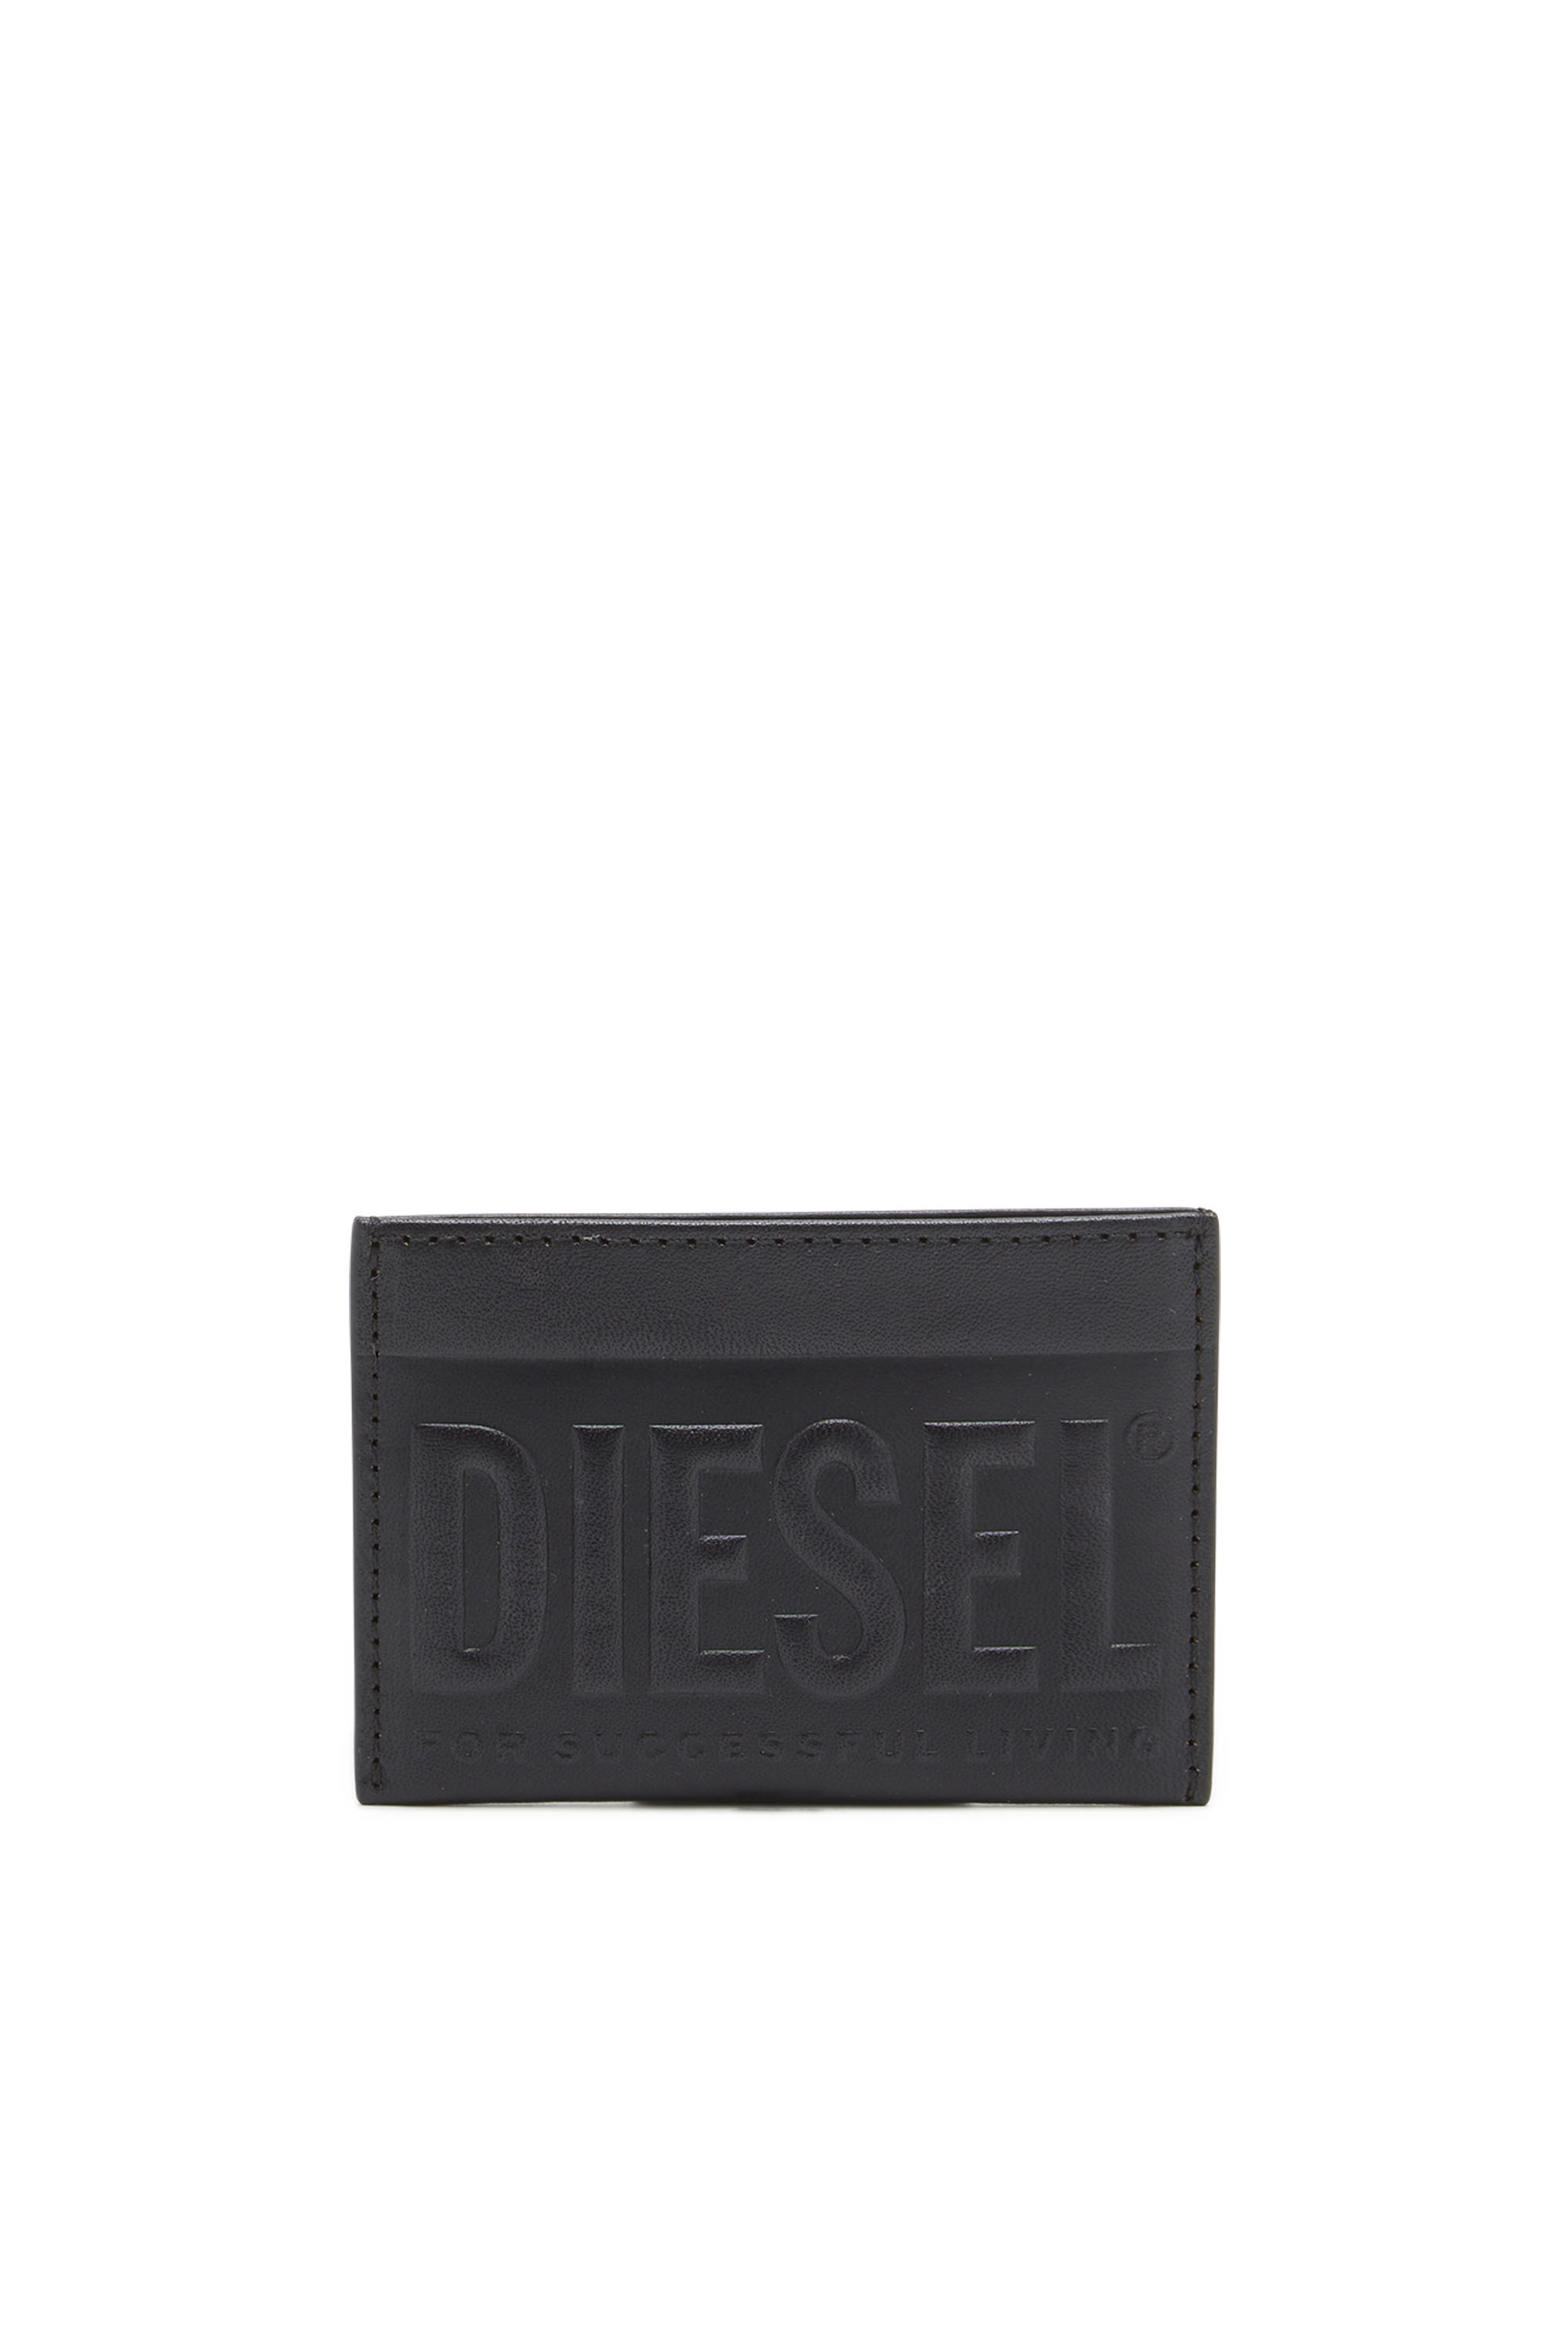 Diesel - DSL 3D EASY CARD HOLDER, Homme Porte-cartes en cuir avec logo embossé in Noir - Image 1